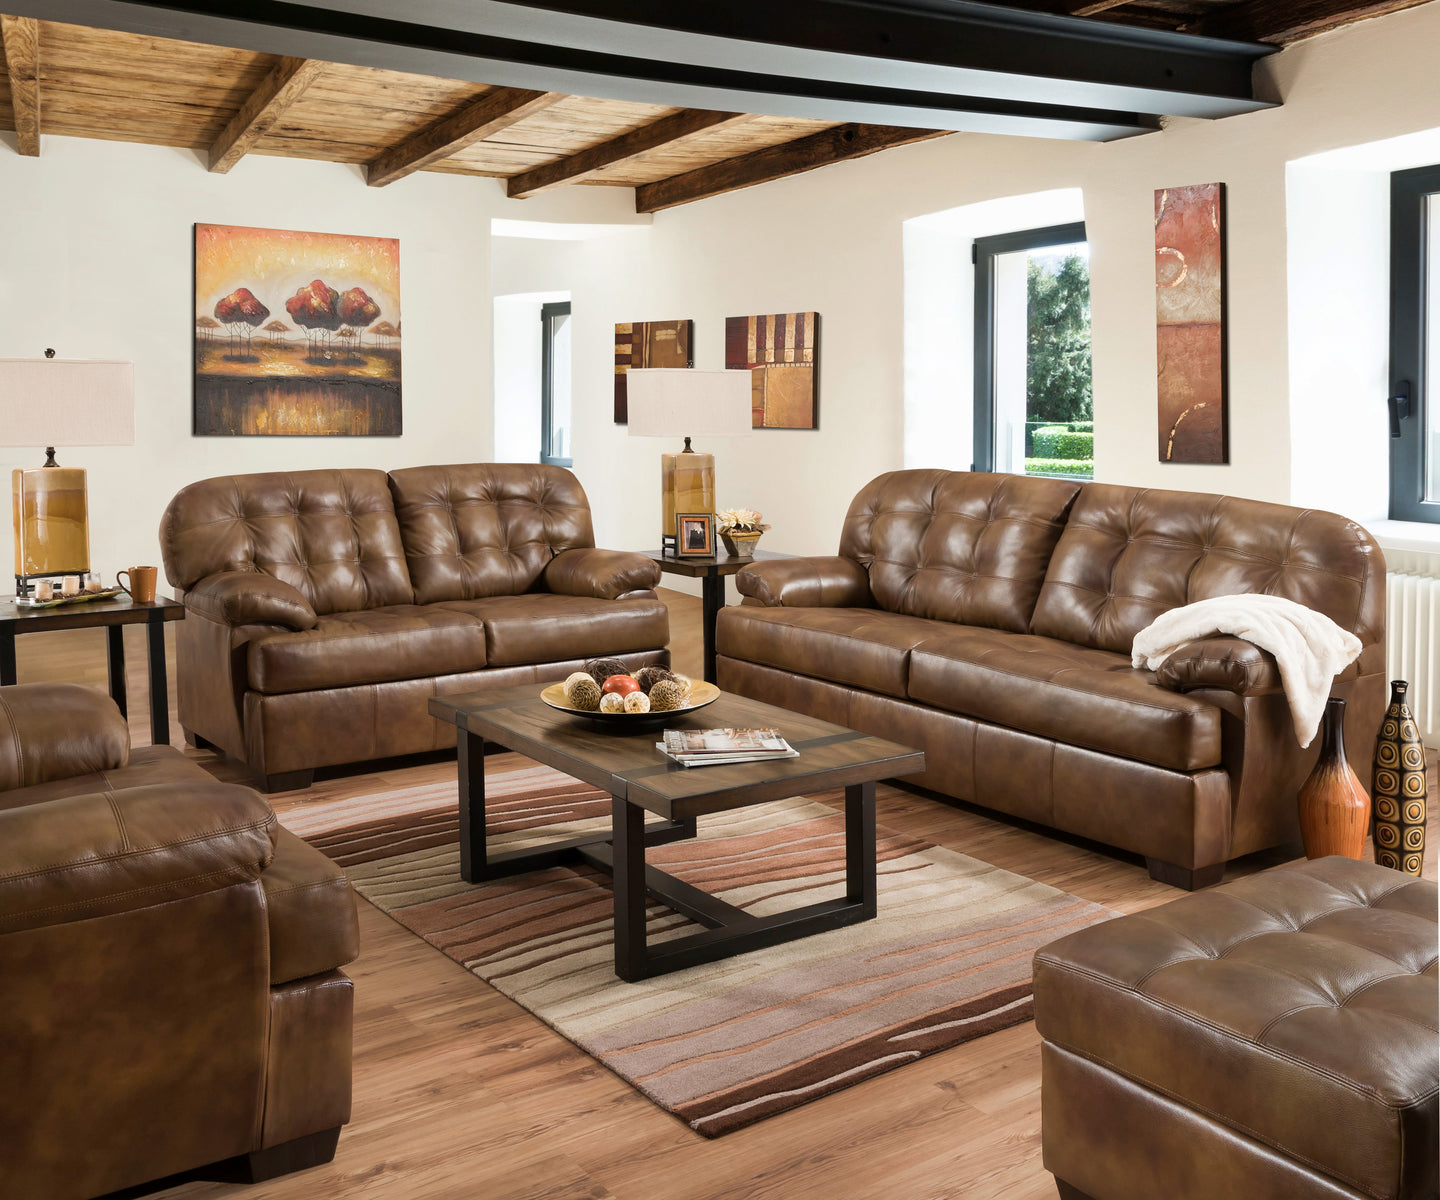 Saturio 2-Tone Brown Top Grain Leather Match Sofa